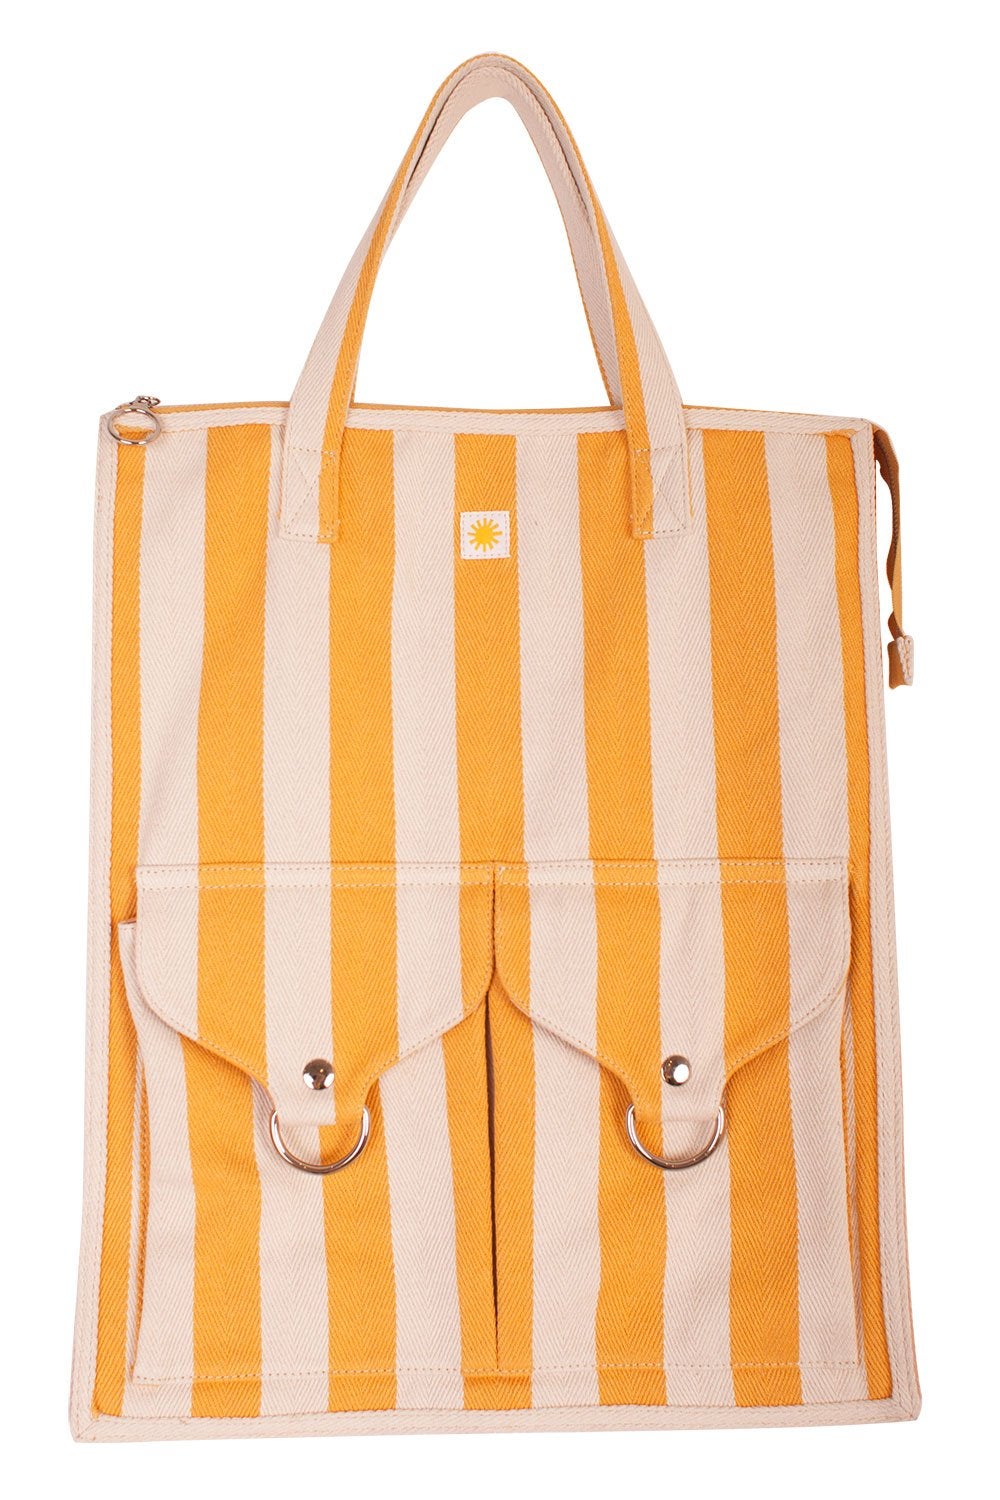 Stripe-Beachbag-yellow-packshot_b9653400-7c84-4b6b-8144-1f707951b9c8_1000x